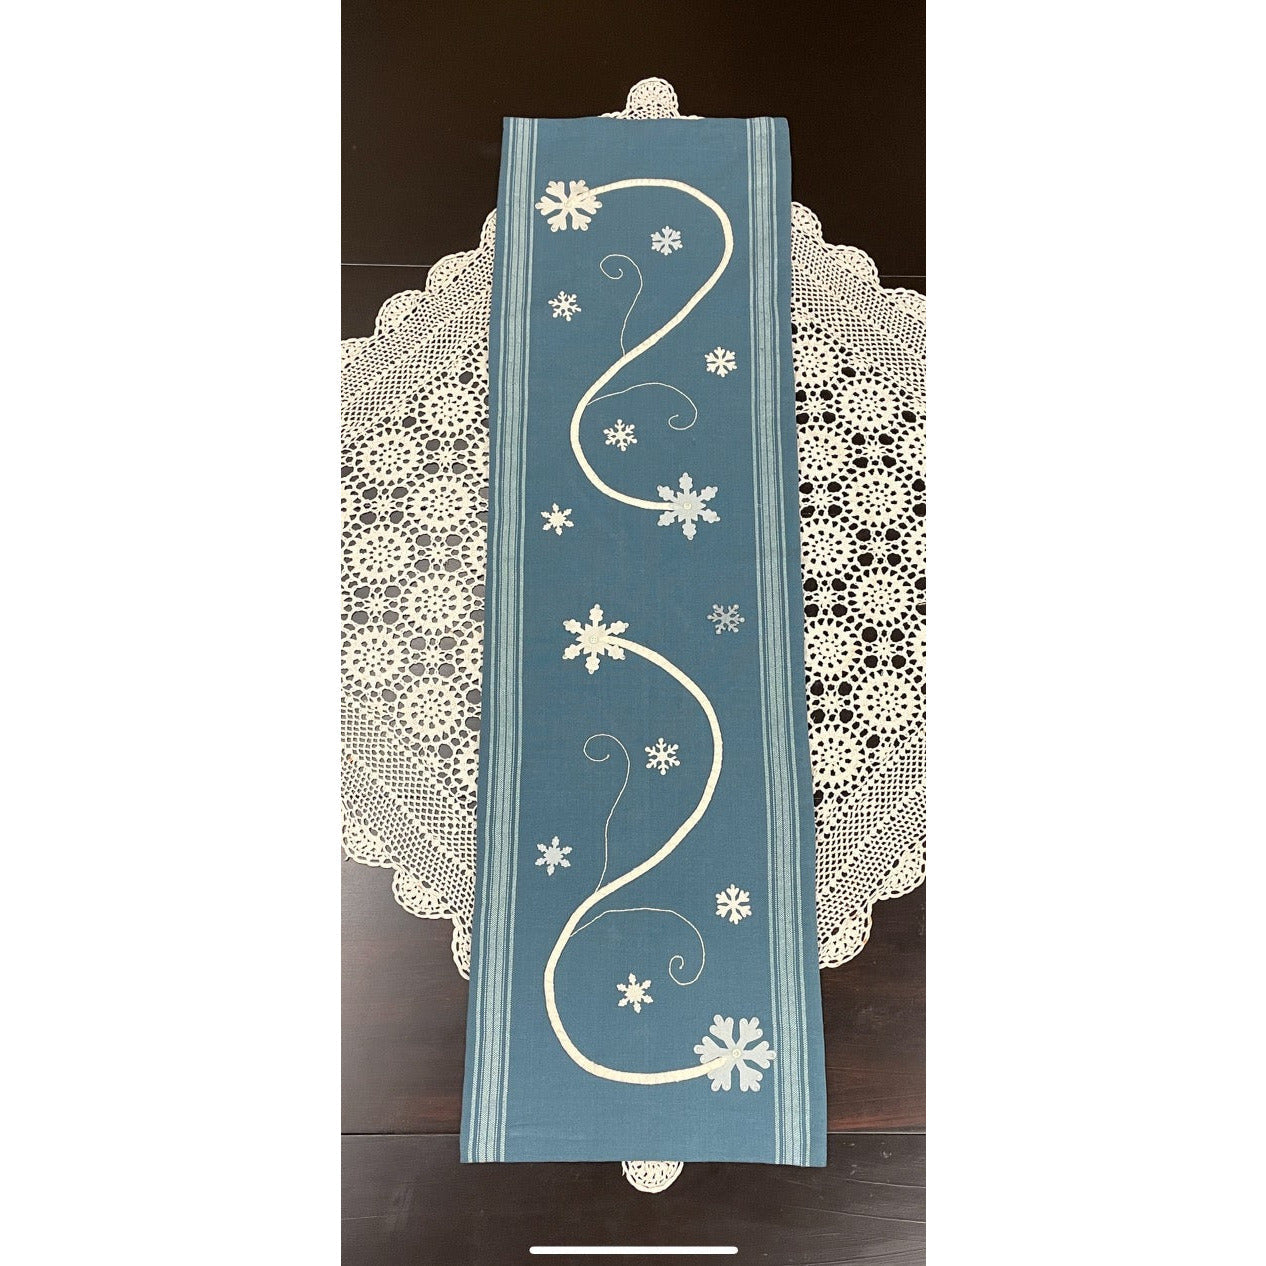 Designs by Tamara ~ Winter Snowflake Table Runner Applique Pattern